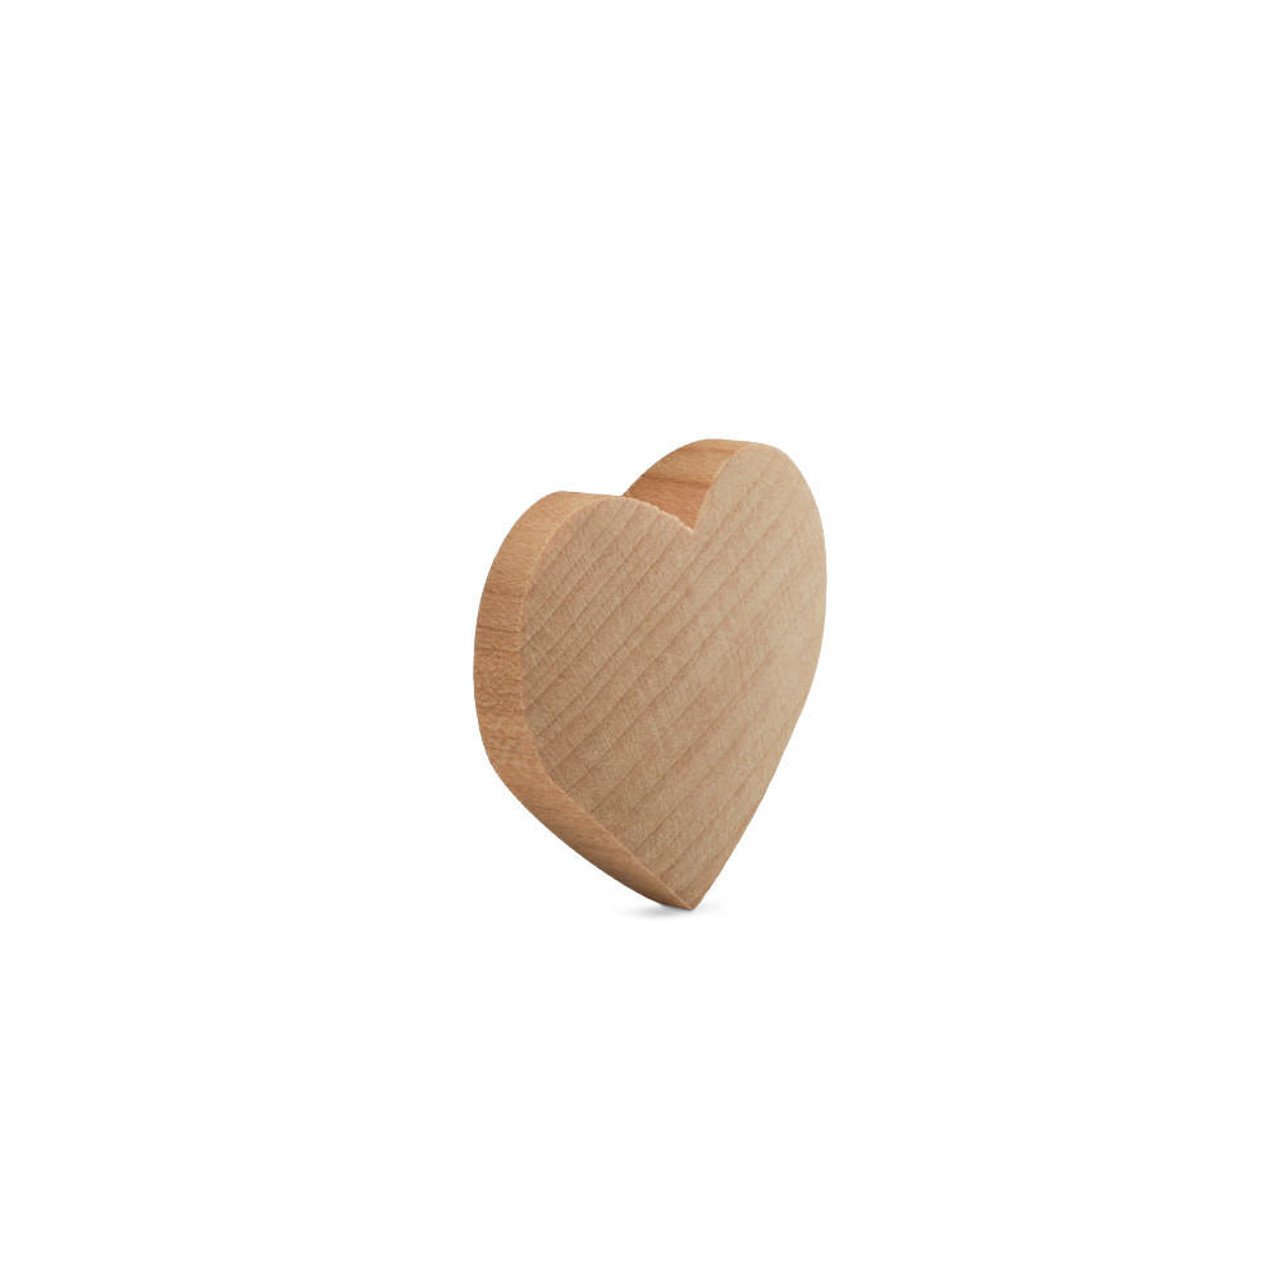 Wood Heart Flat 2 X 1/4 Thick (Per Bag of 25)